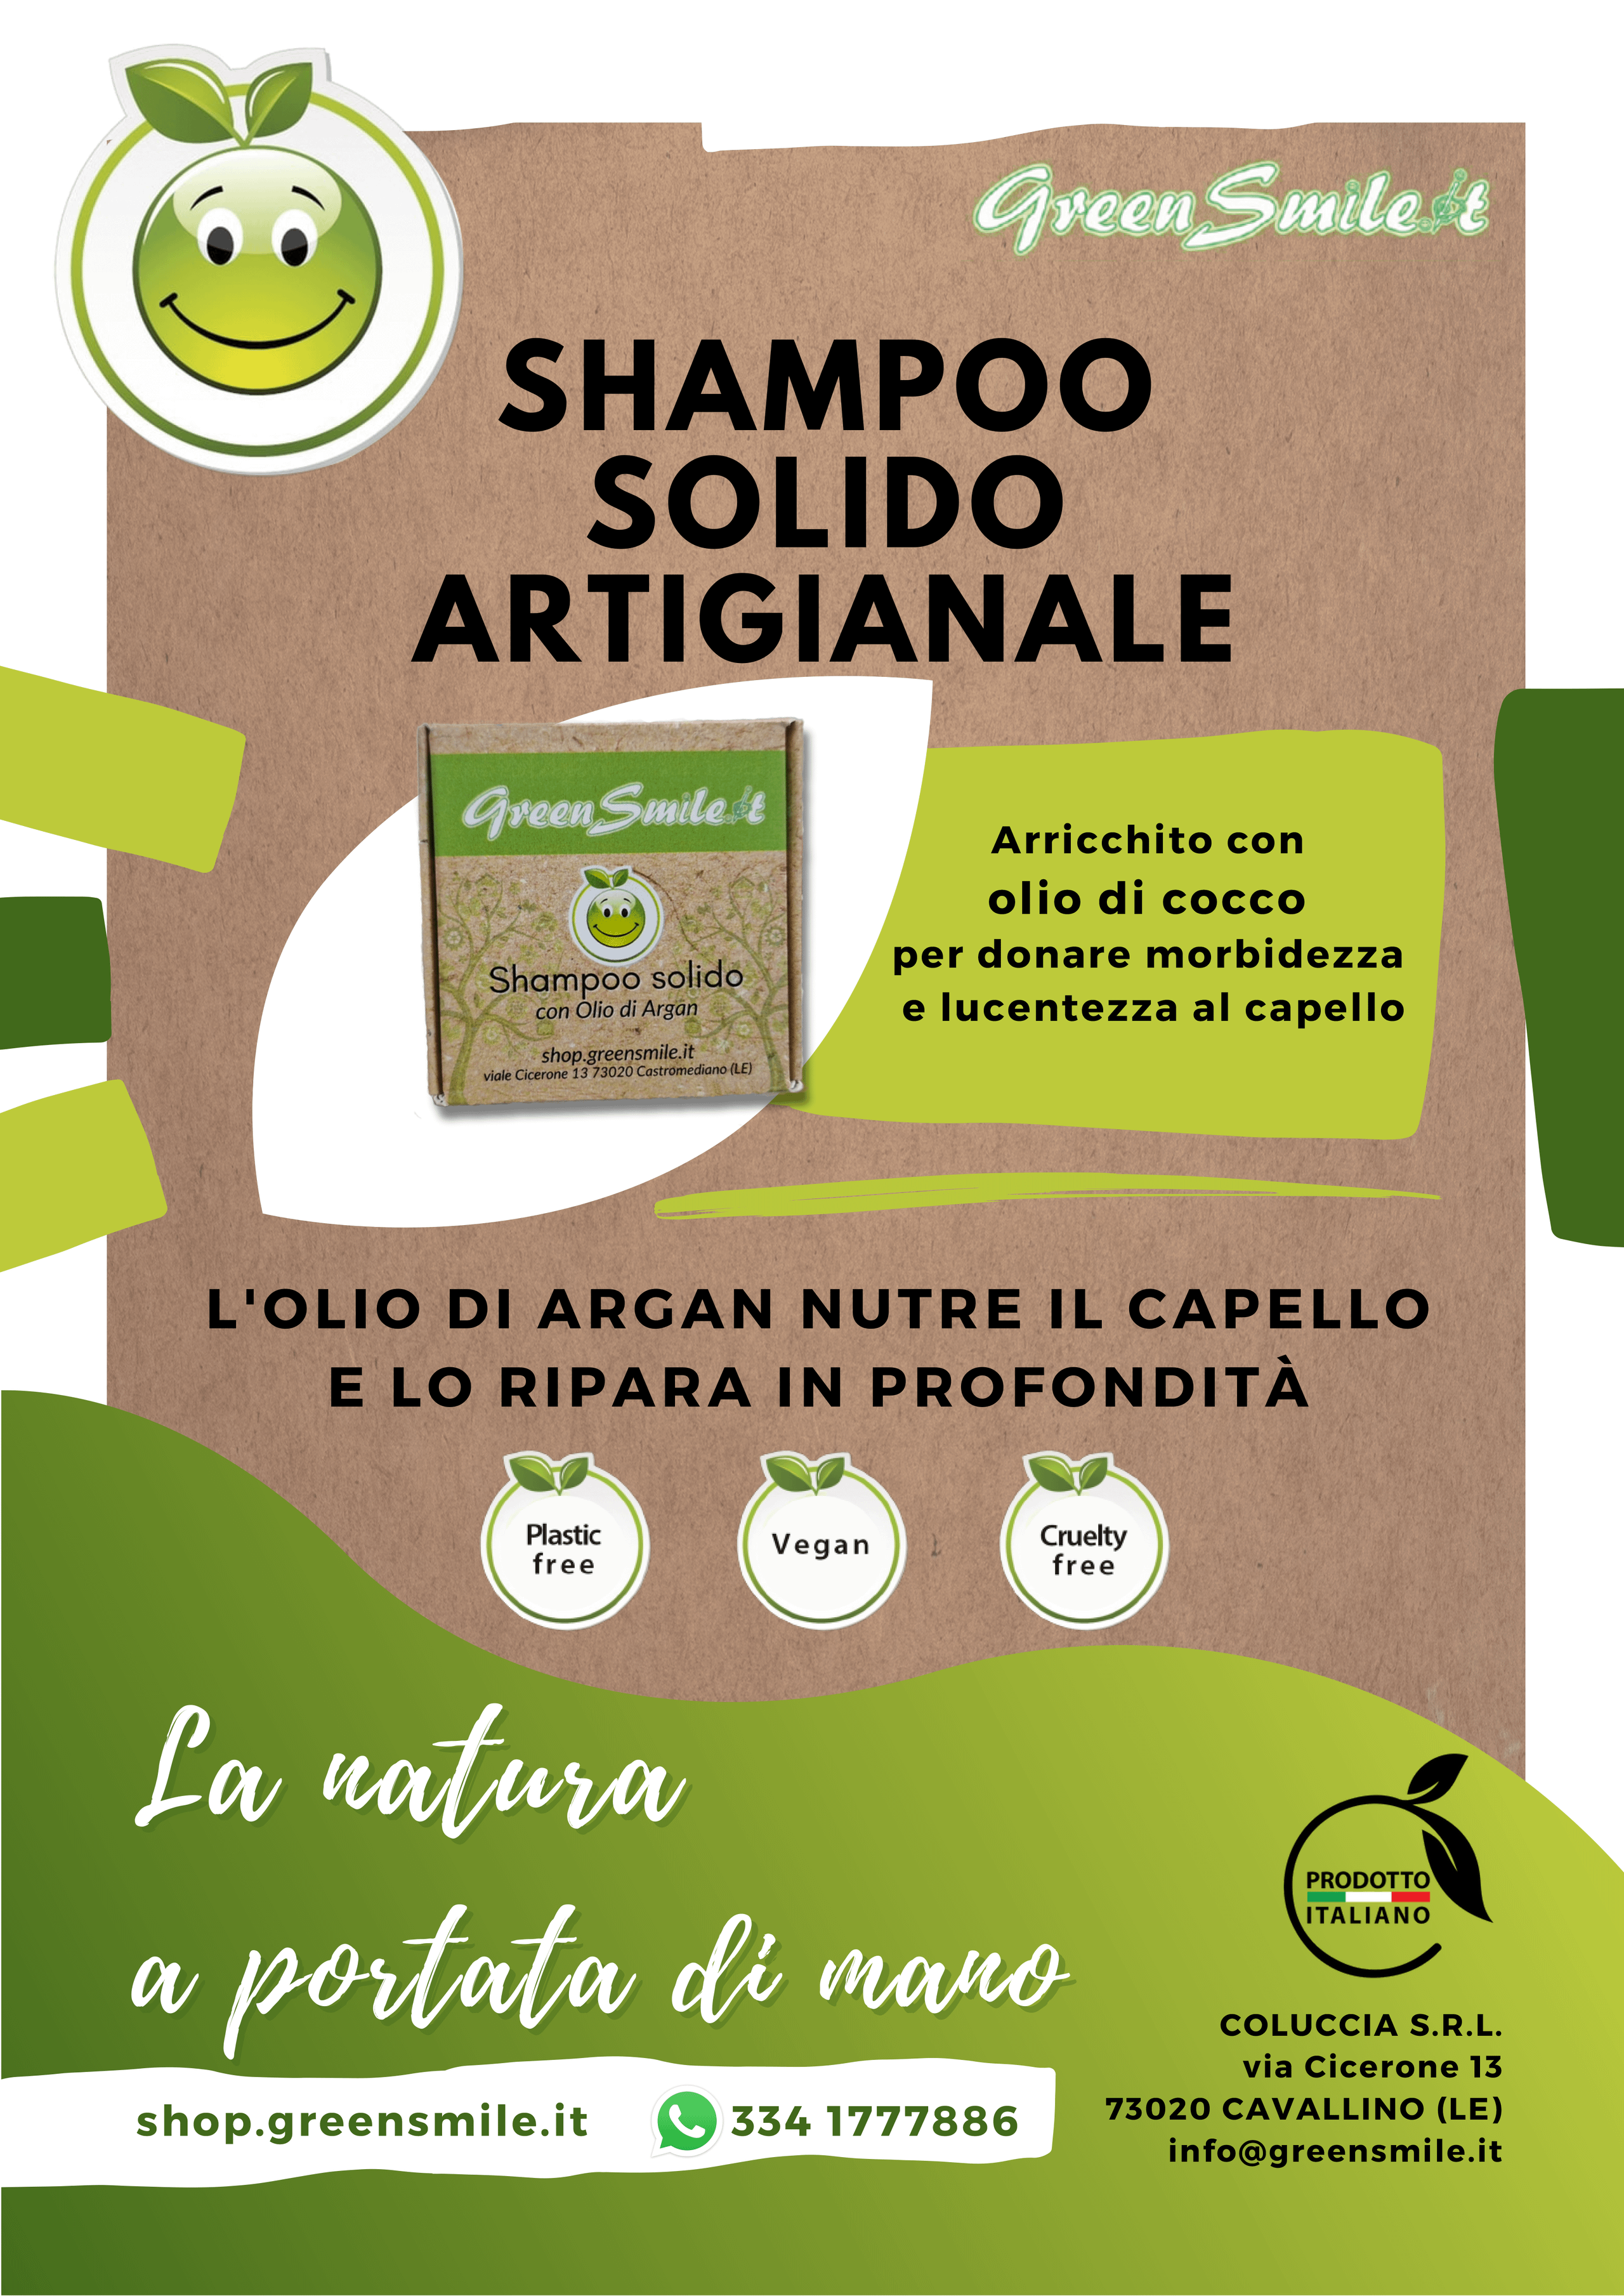 Shampoo artigianale